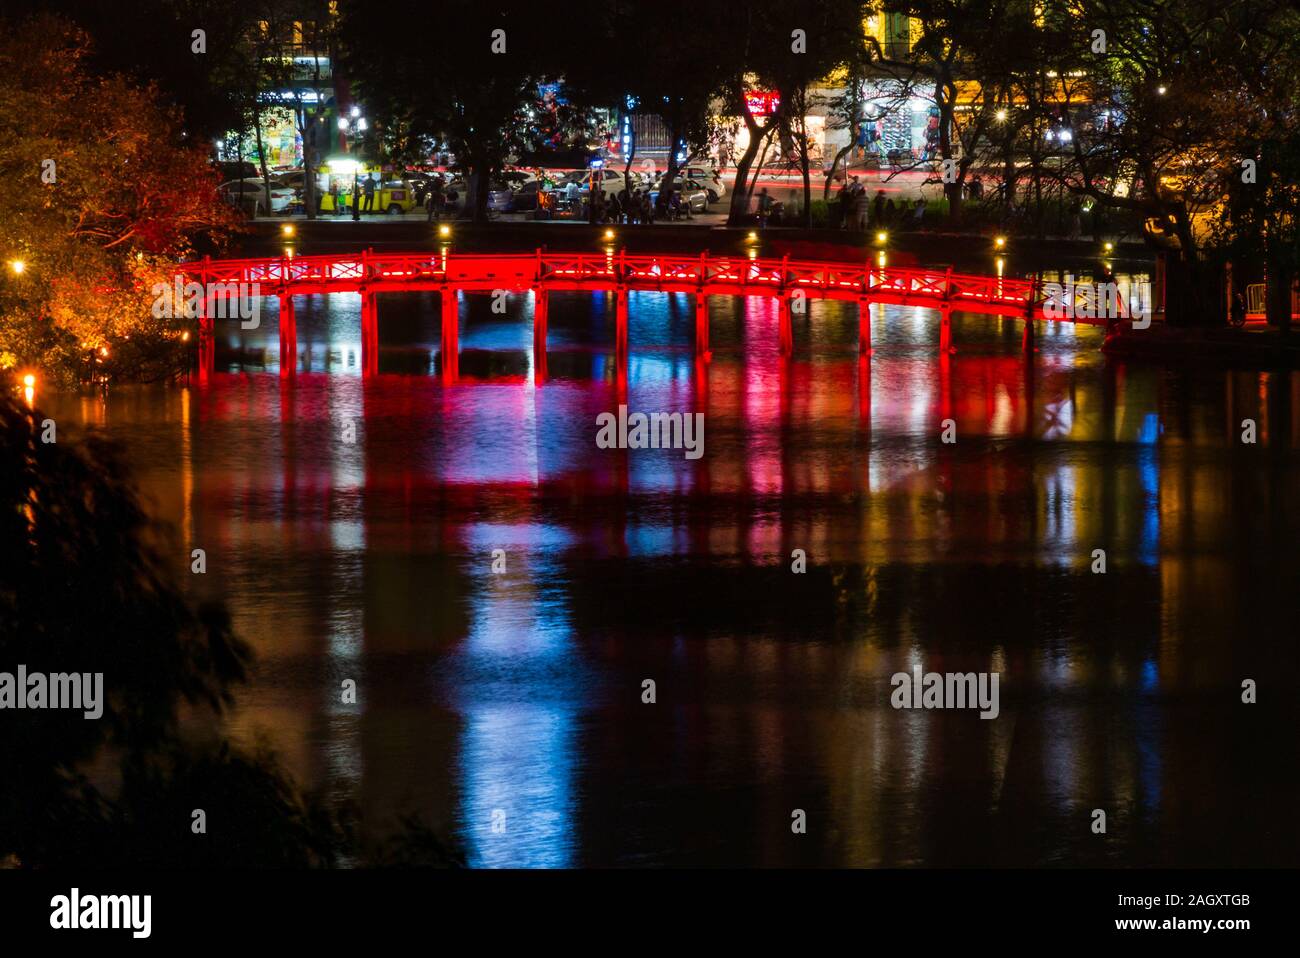 The Huc Bridge at night, Hoan Kiem Lake, Hanoi, Vietnam, Asia Stock Photo